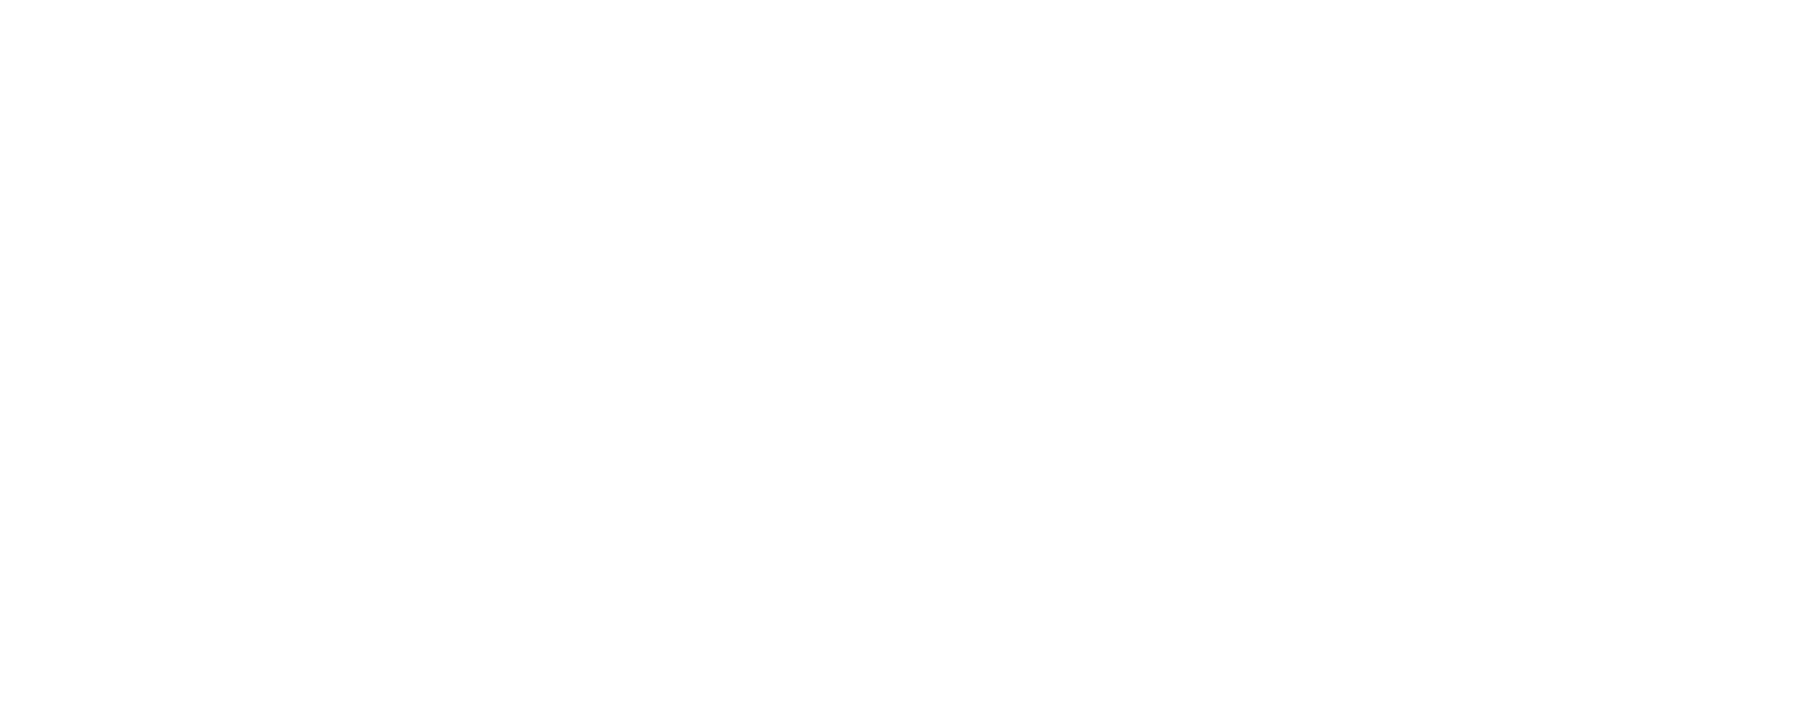 PGR-coral-ridge-seabrook-logo-white-1